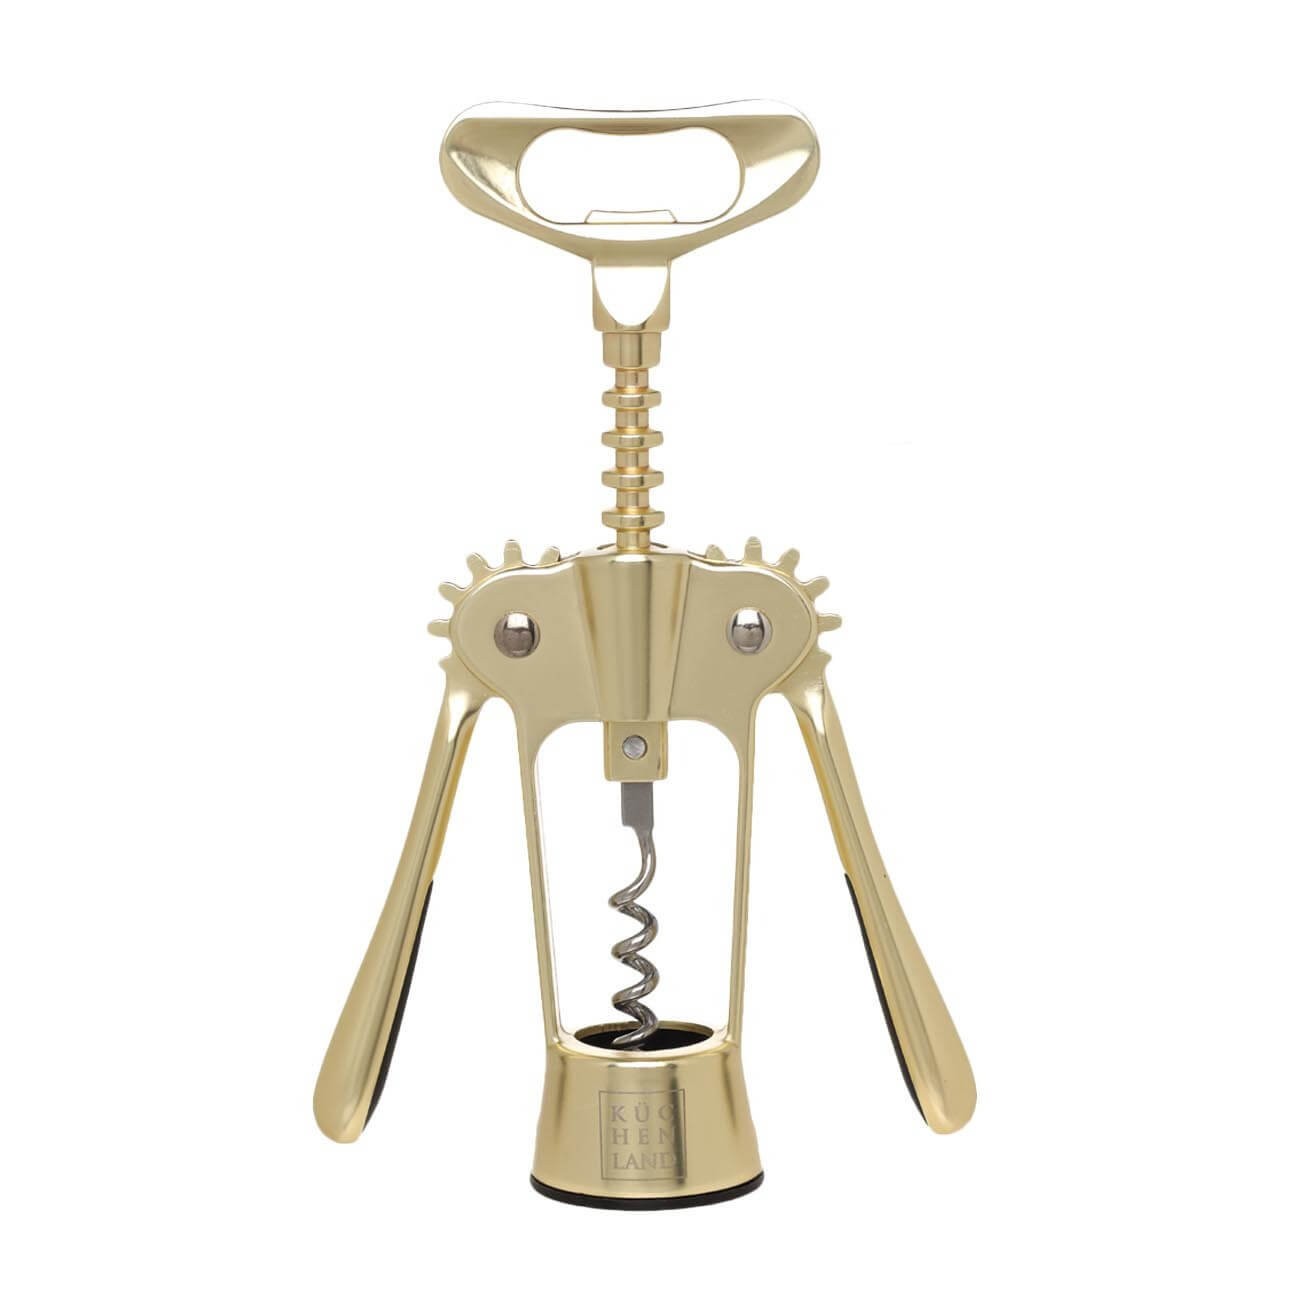 Lever corkscrew, 20 cm, metal / plastic, golden, Start gold изображение № 1